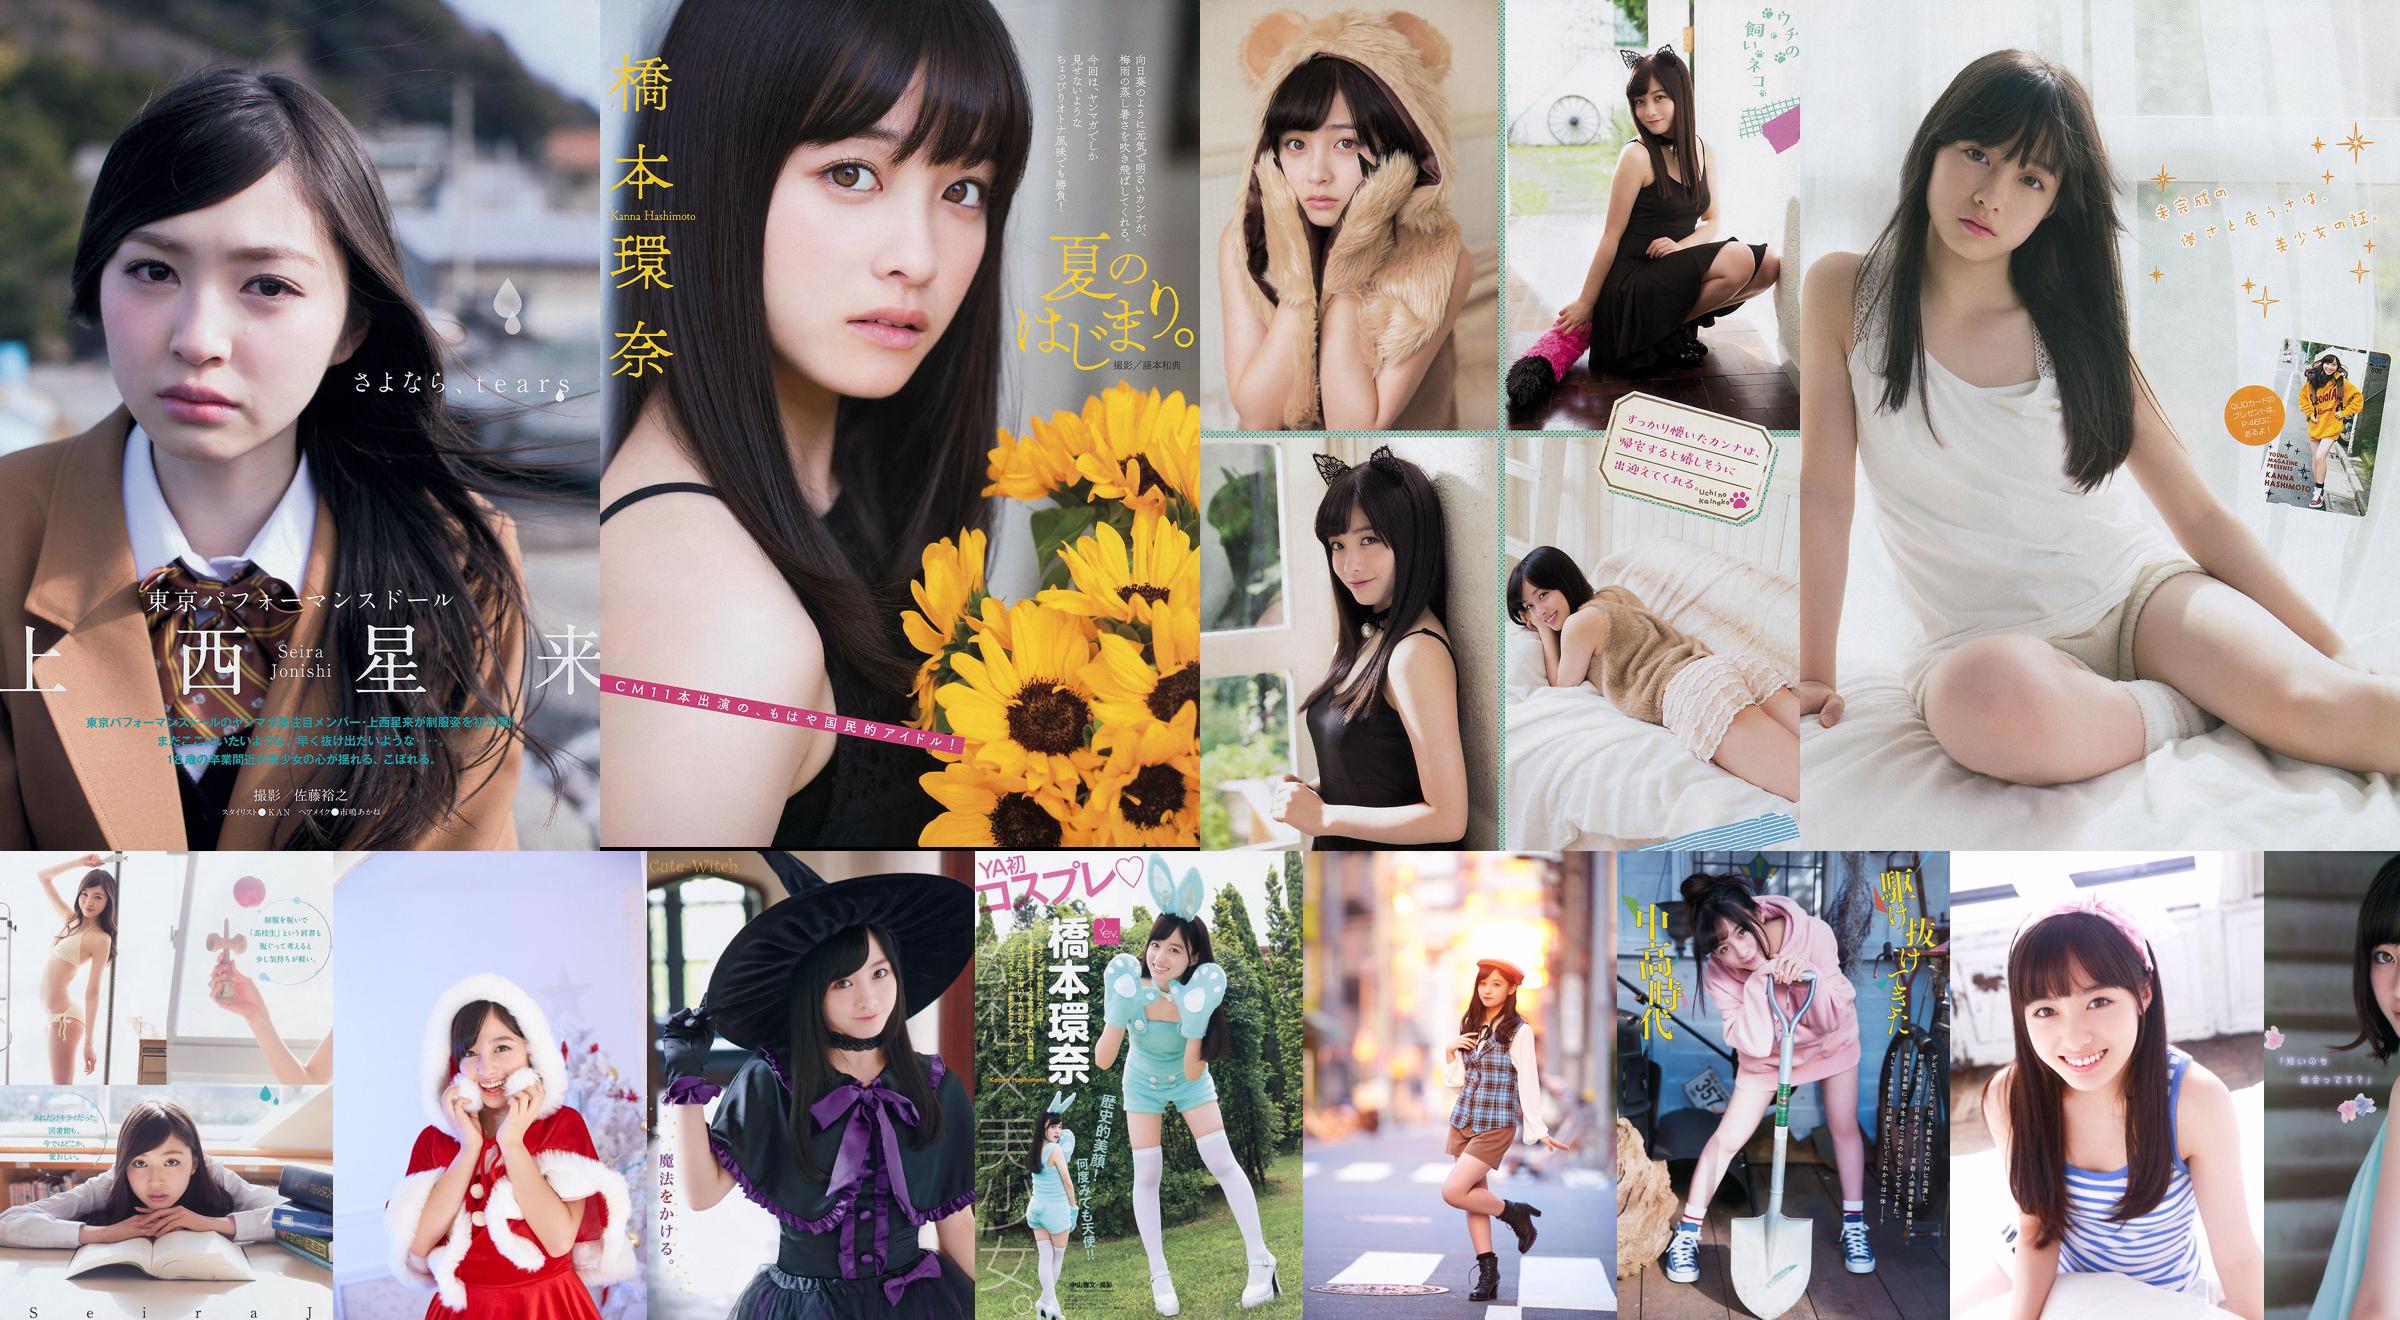 [Revista joven] Kanna Hashimoto Yuria Kizaki 2014 No.34 Fotografía No.021730 Página 1